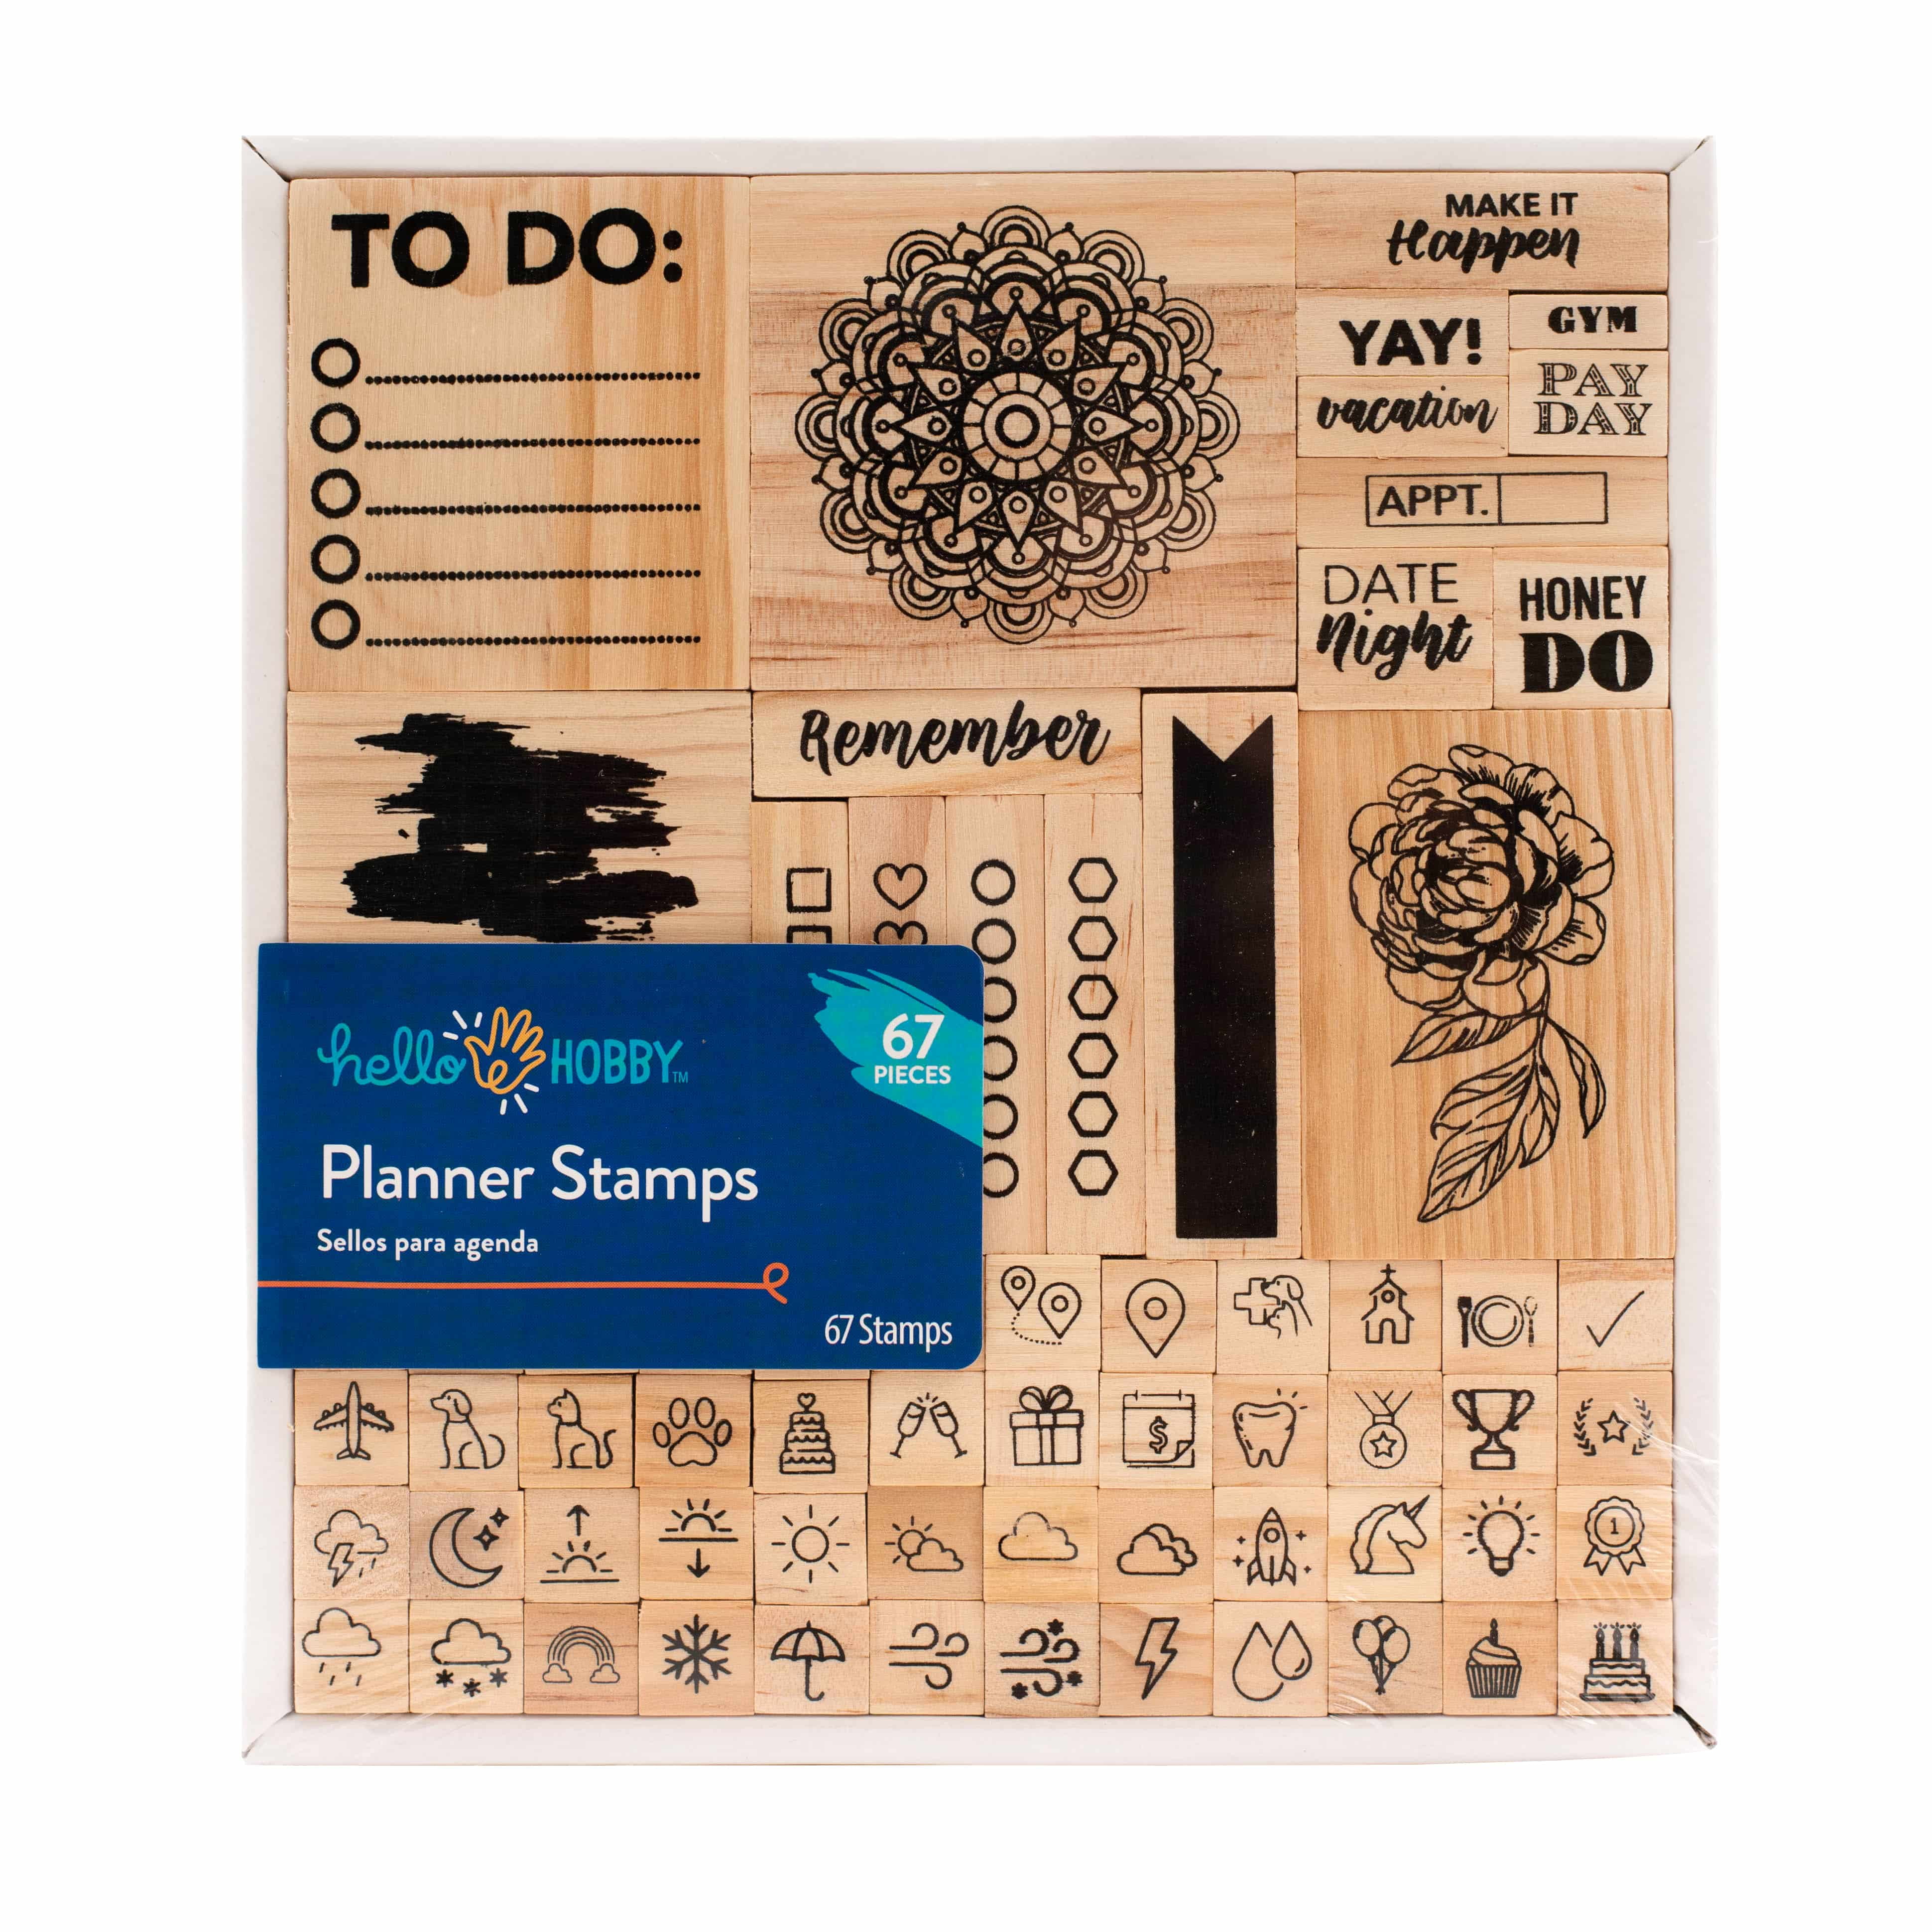 Buy Alphabet Pyrography Stamps Kit Hotstamp Set Lower